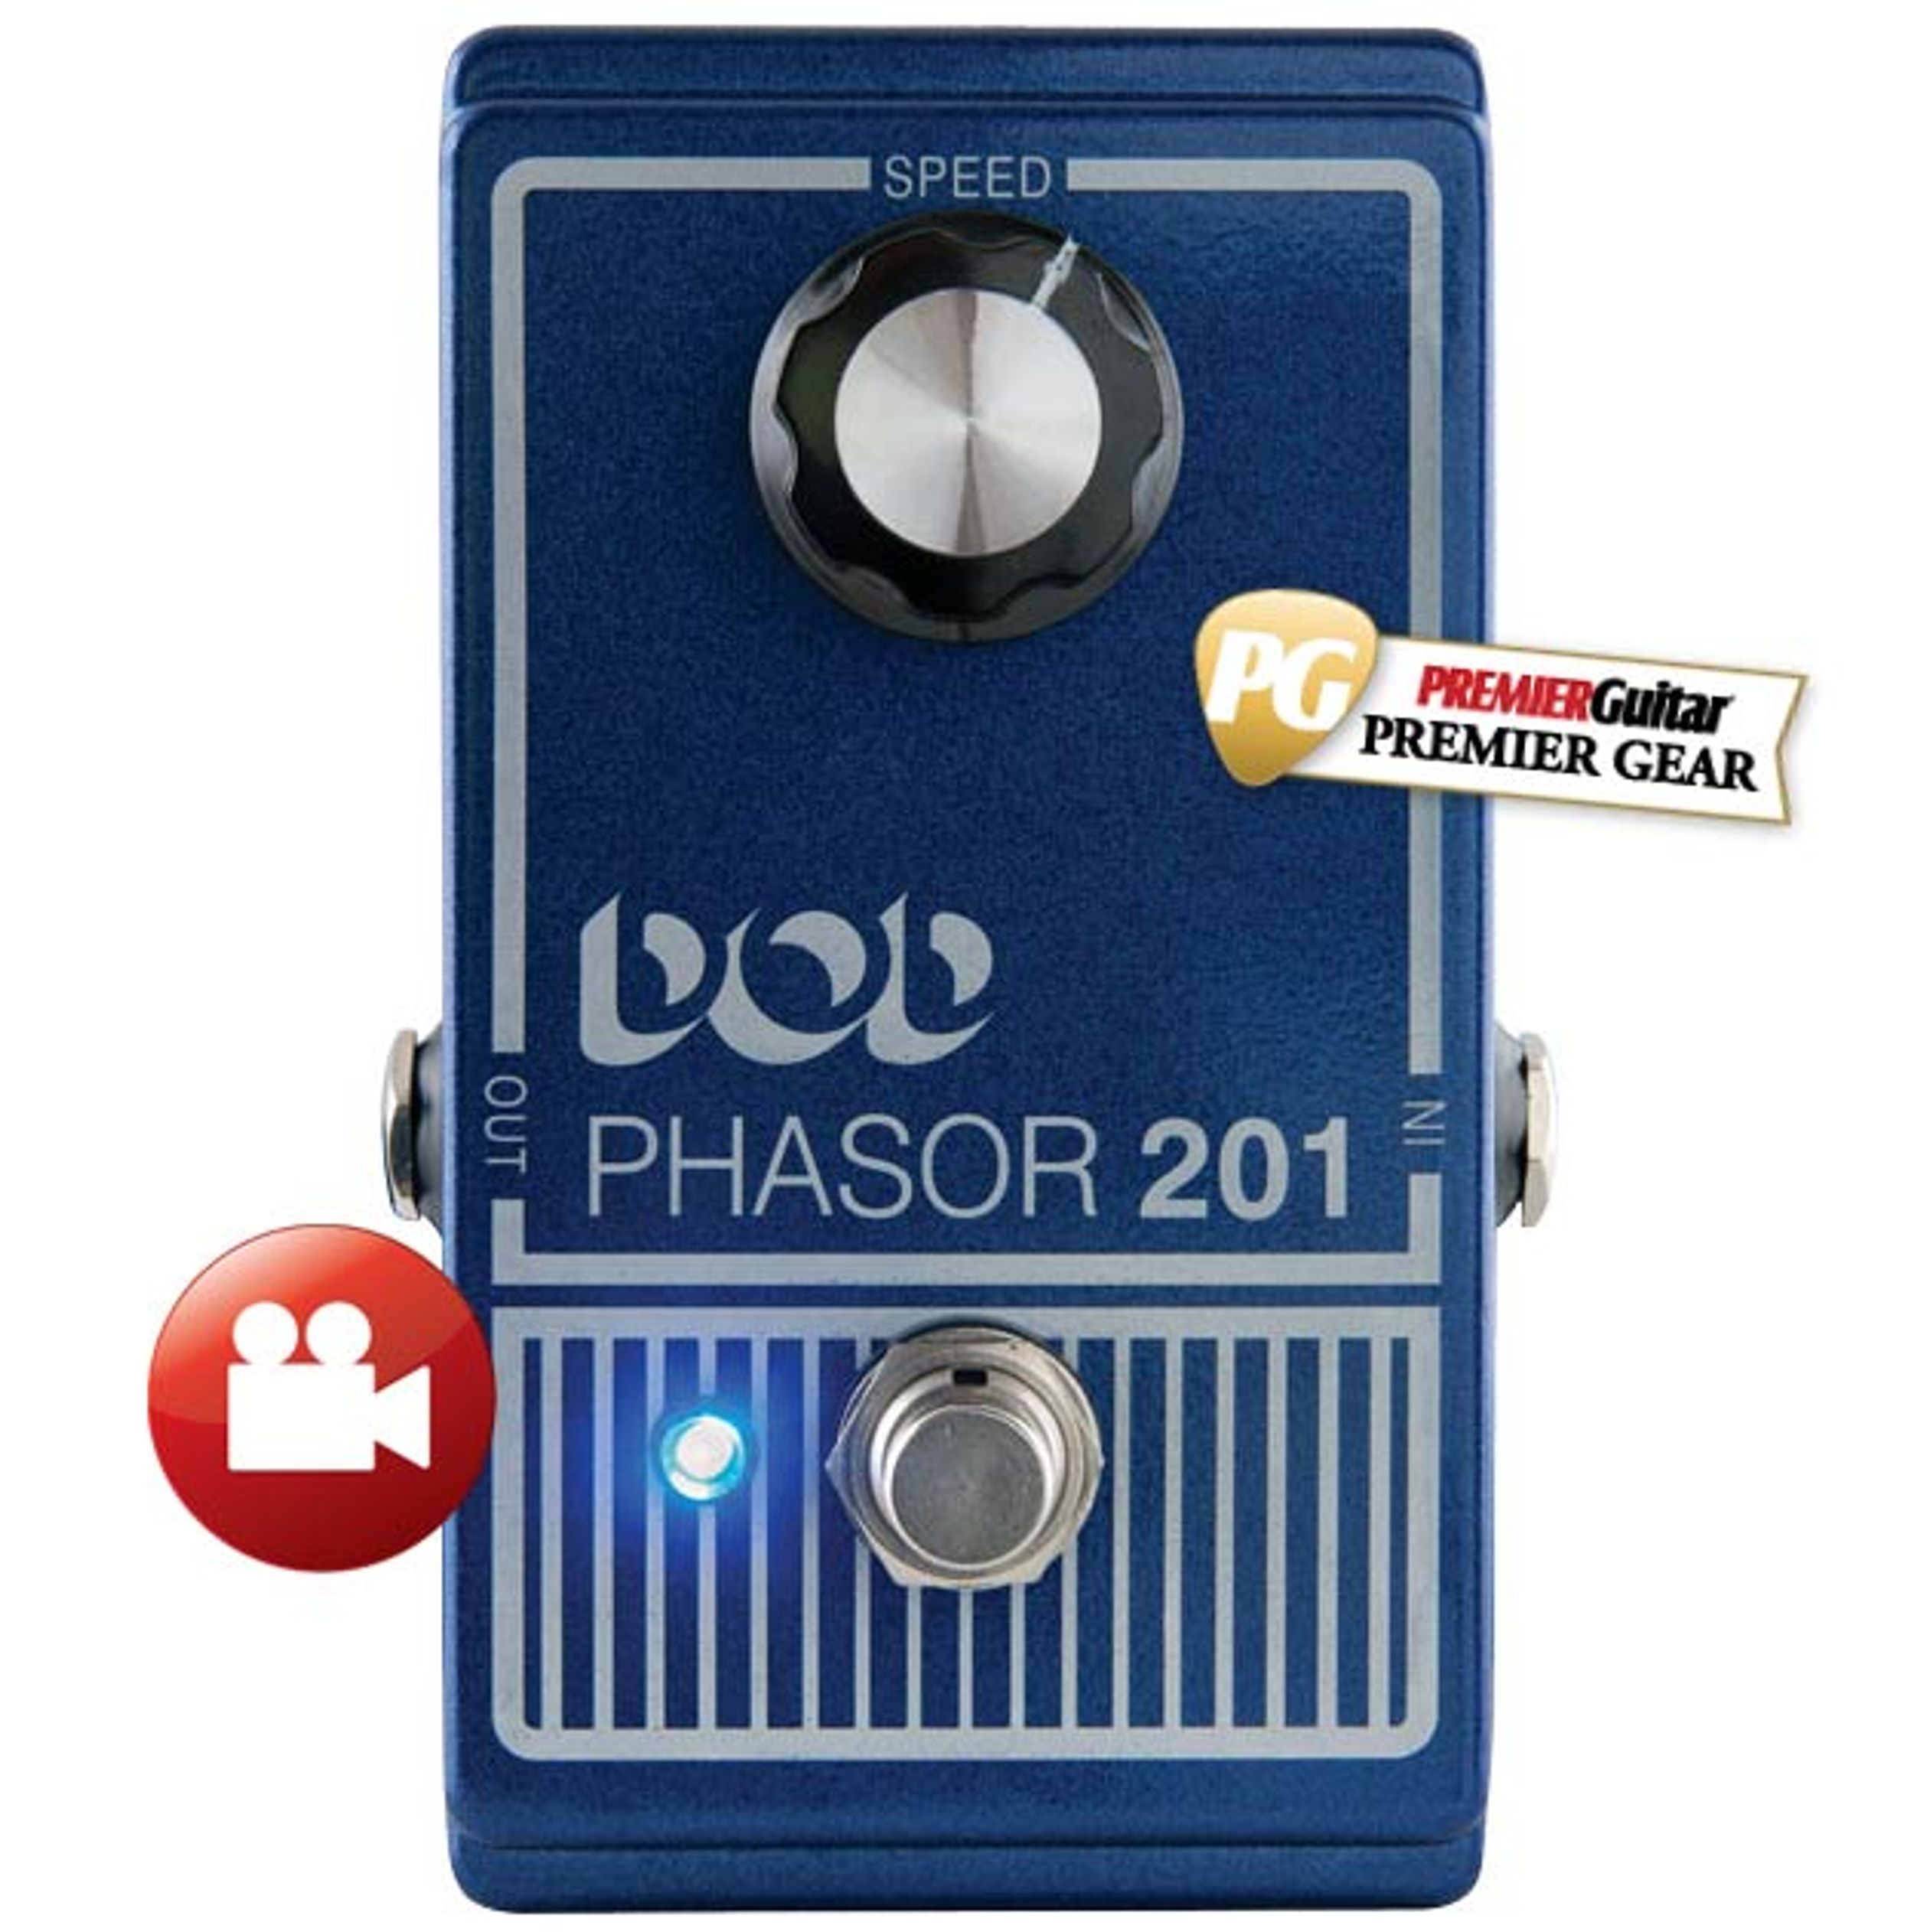 DOD Phasor 201 Review